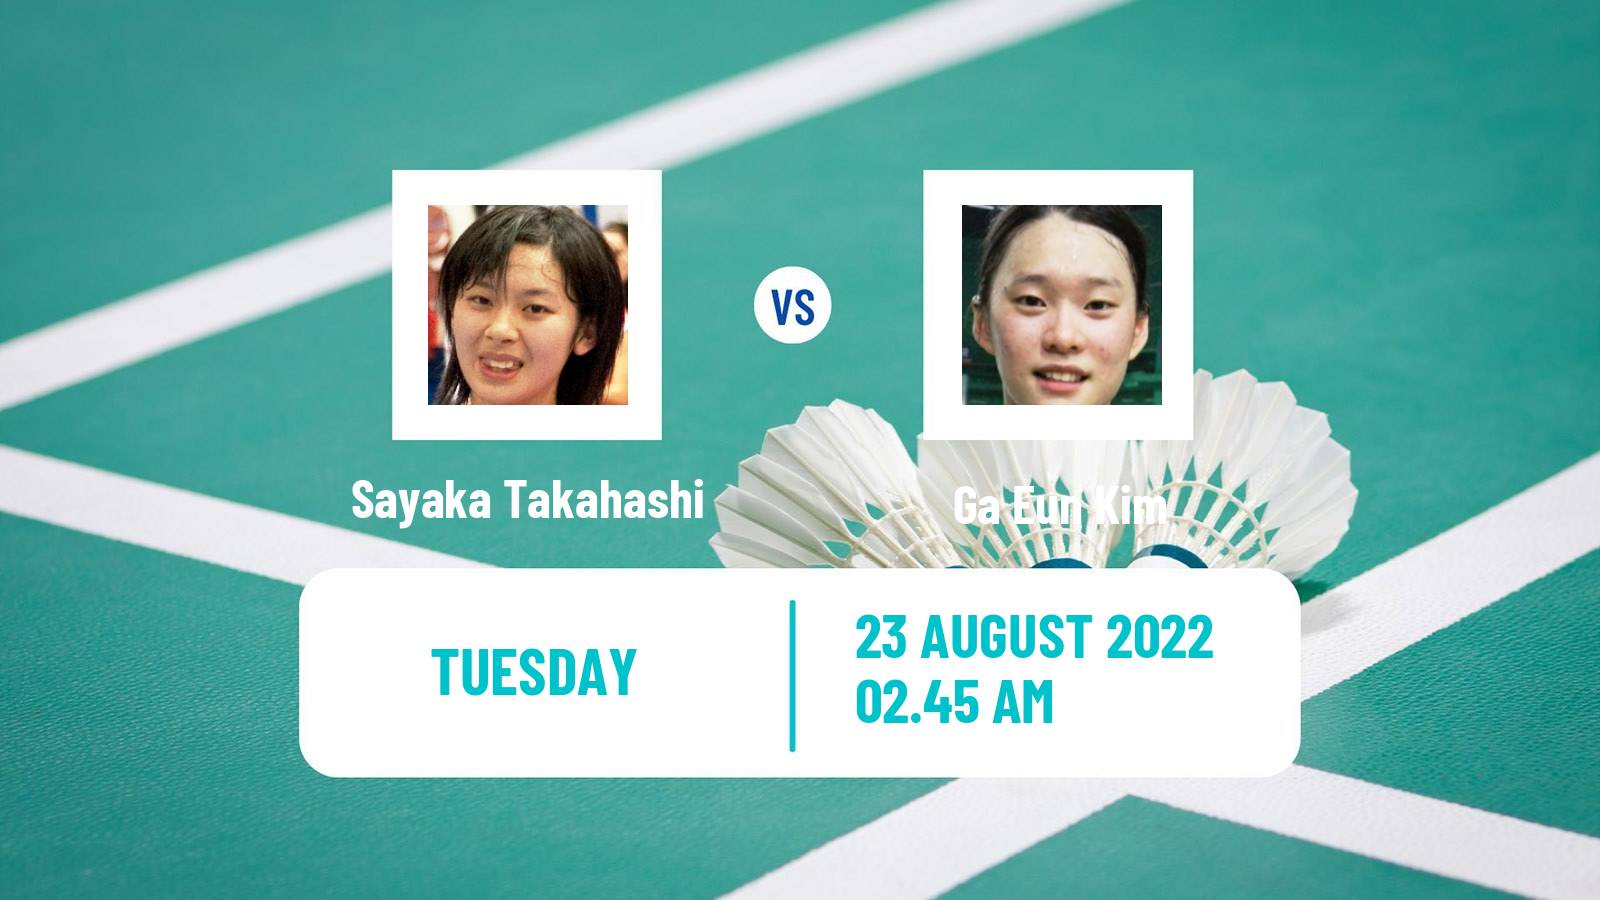 Badminton Badminton Sayaka Takahashi - Ga Eun Kim